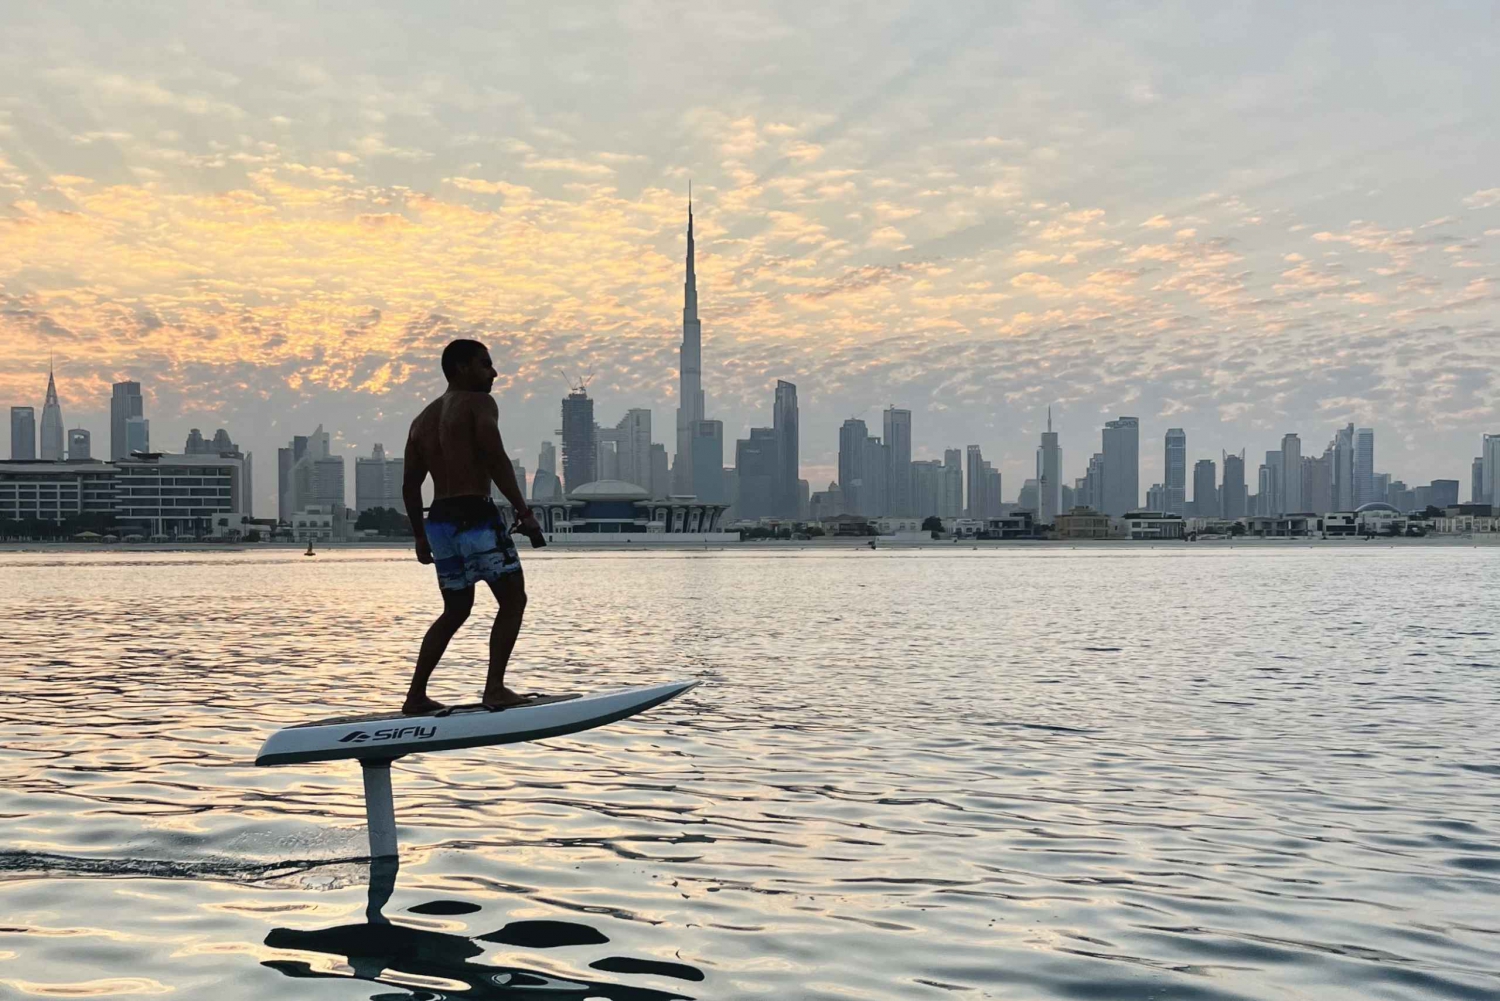 Dubai: Electric Hydrofoil or eFoil Surfboard Experience